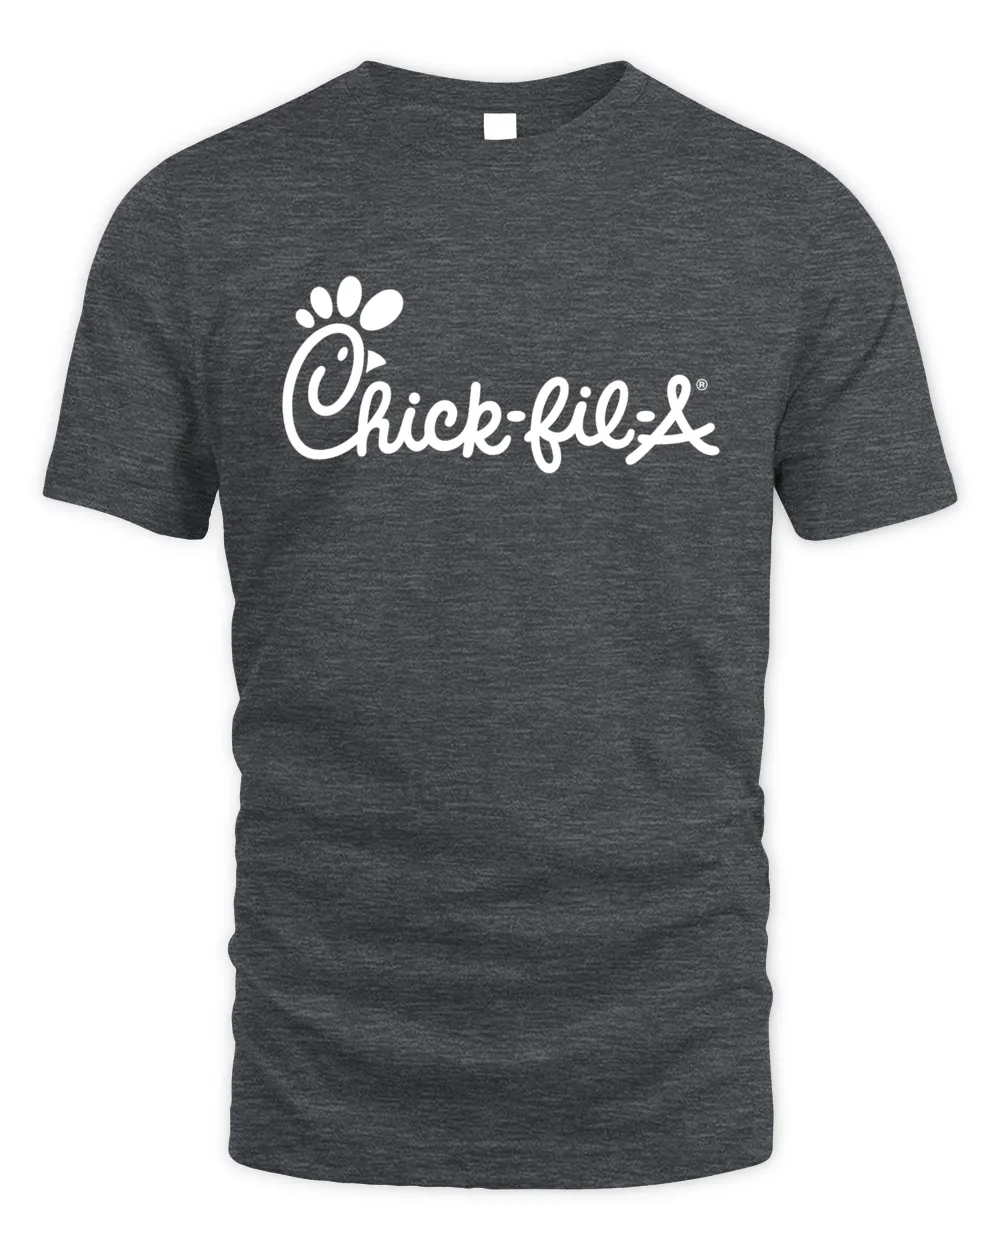 Chick Fil A Shirt